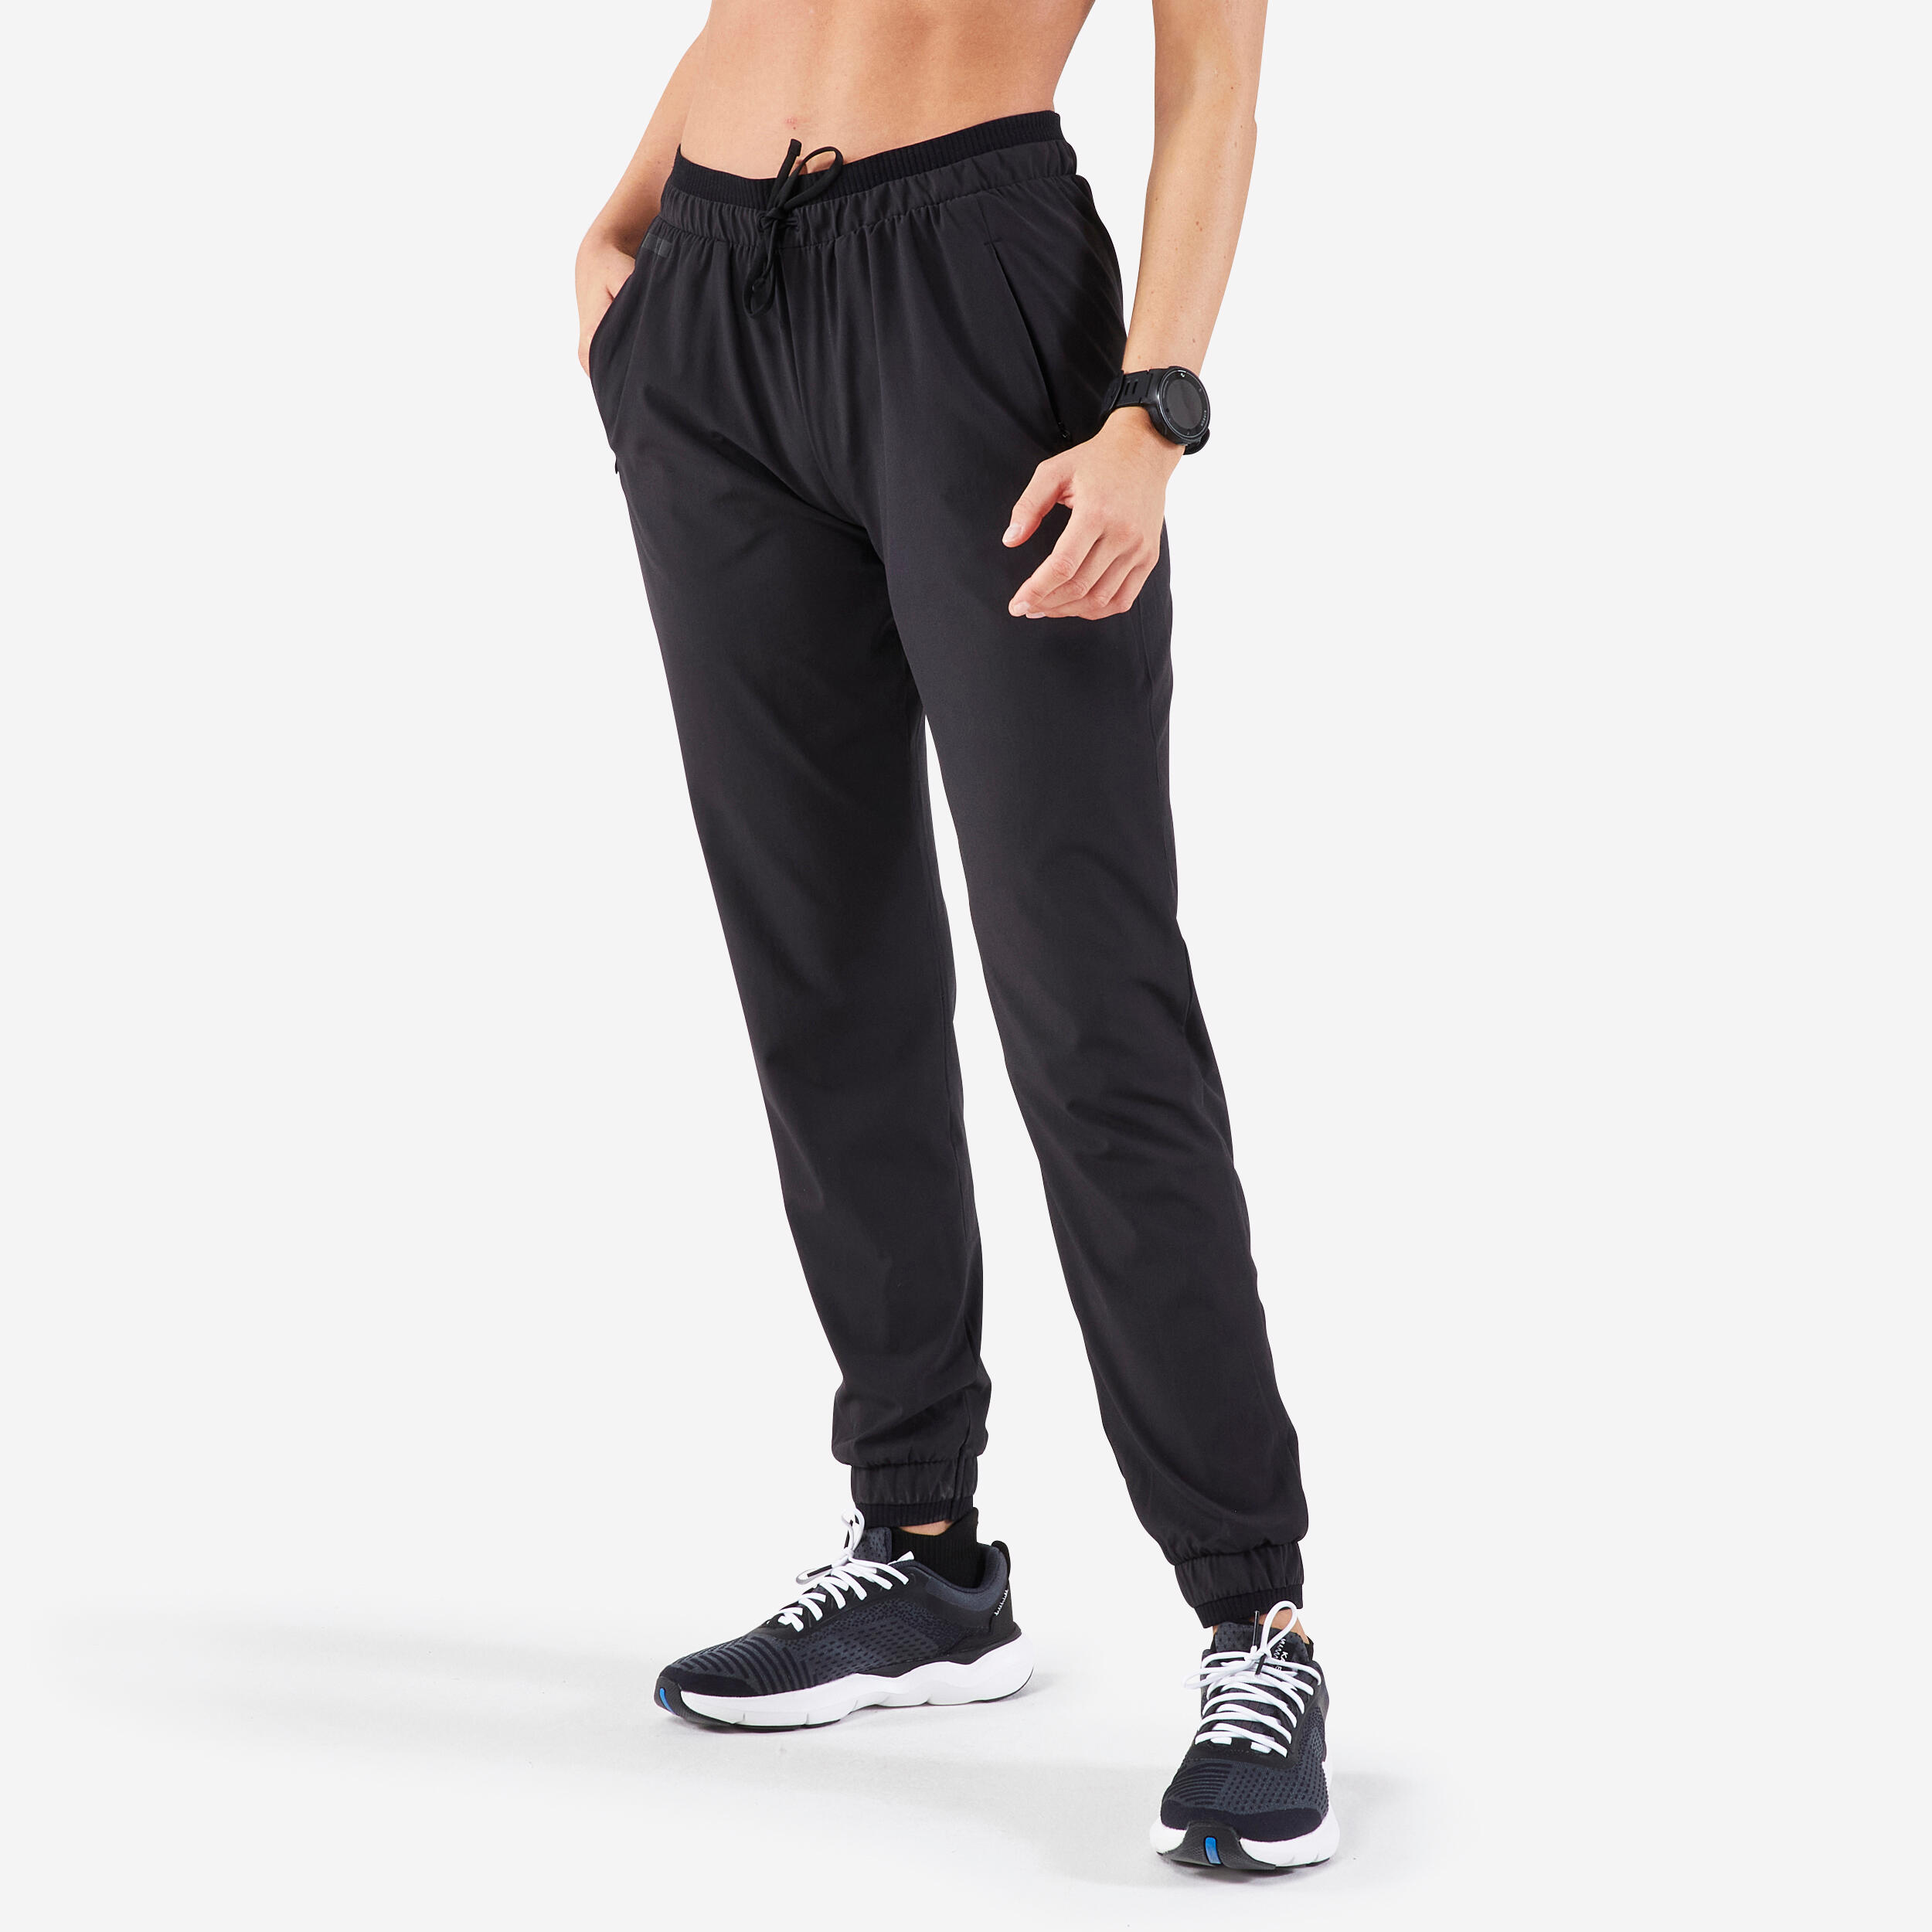 Pantalon de jogging respirant femmes - Run Dry noir - KALENJI